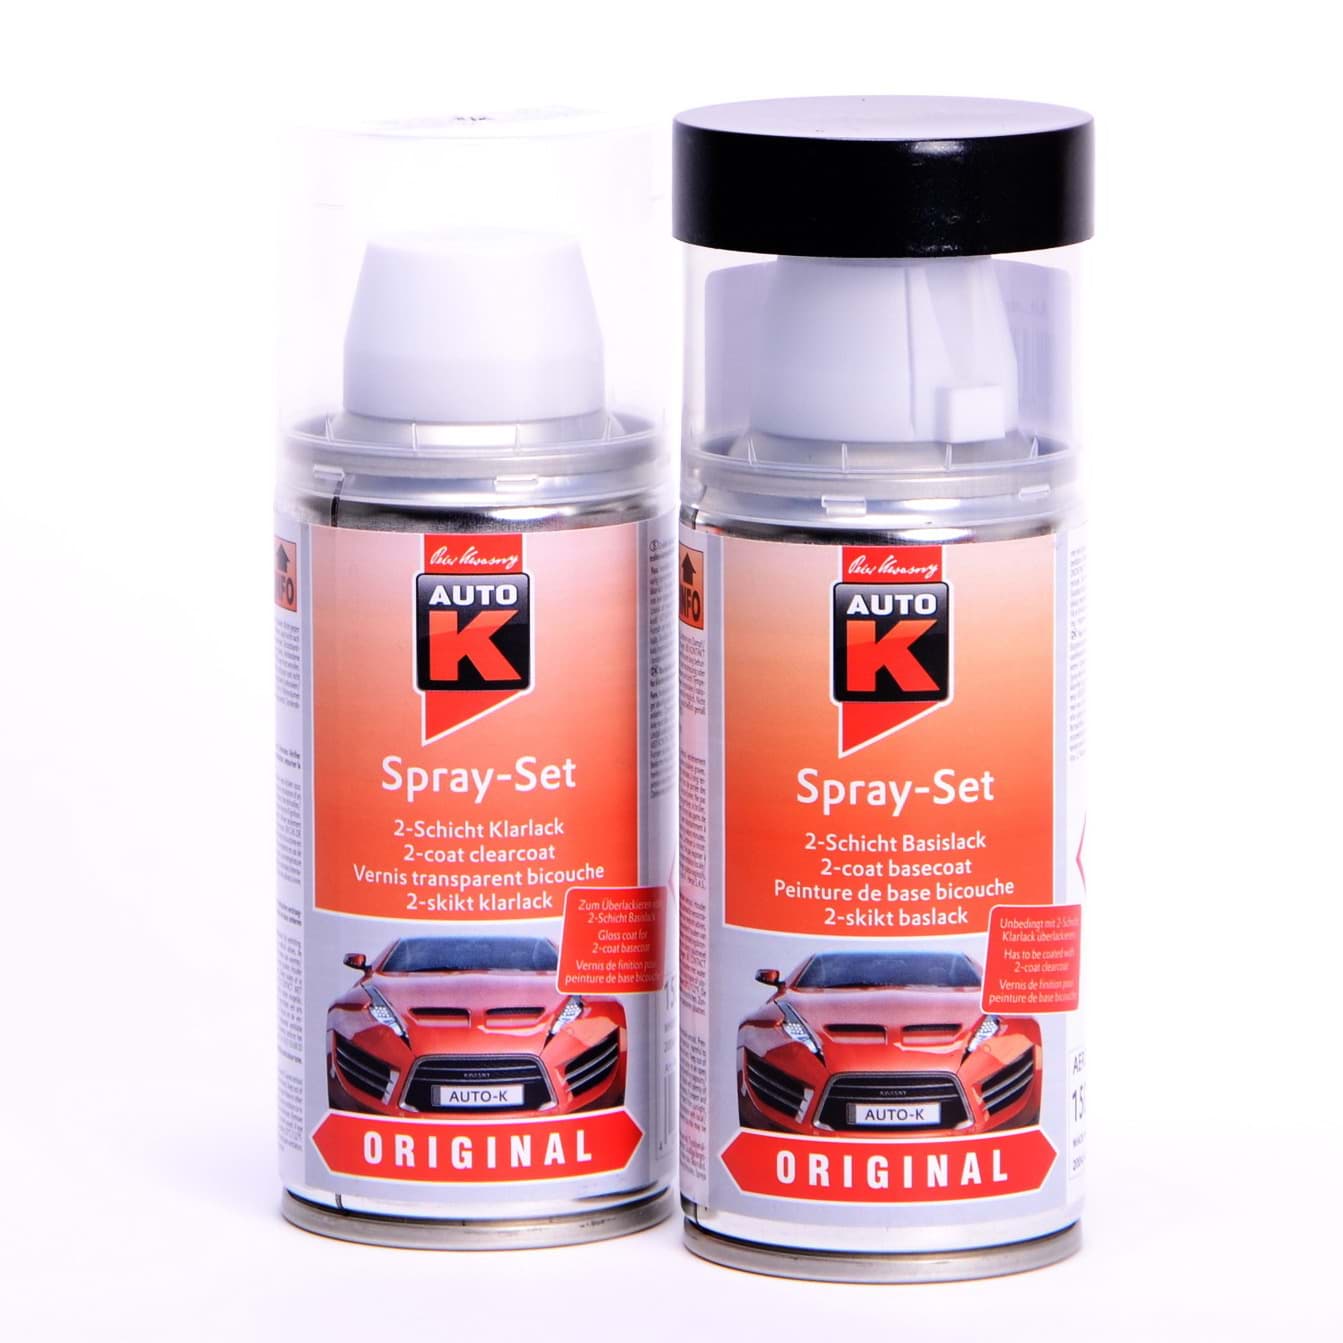 Auto-K Spray-Set Autolack für Volkswagen, VW, Audi LB5N Indigoblau perl met 20868 resmi